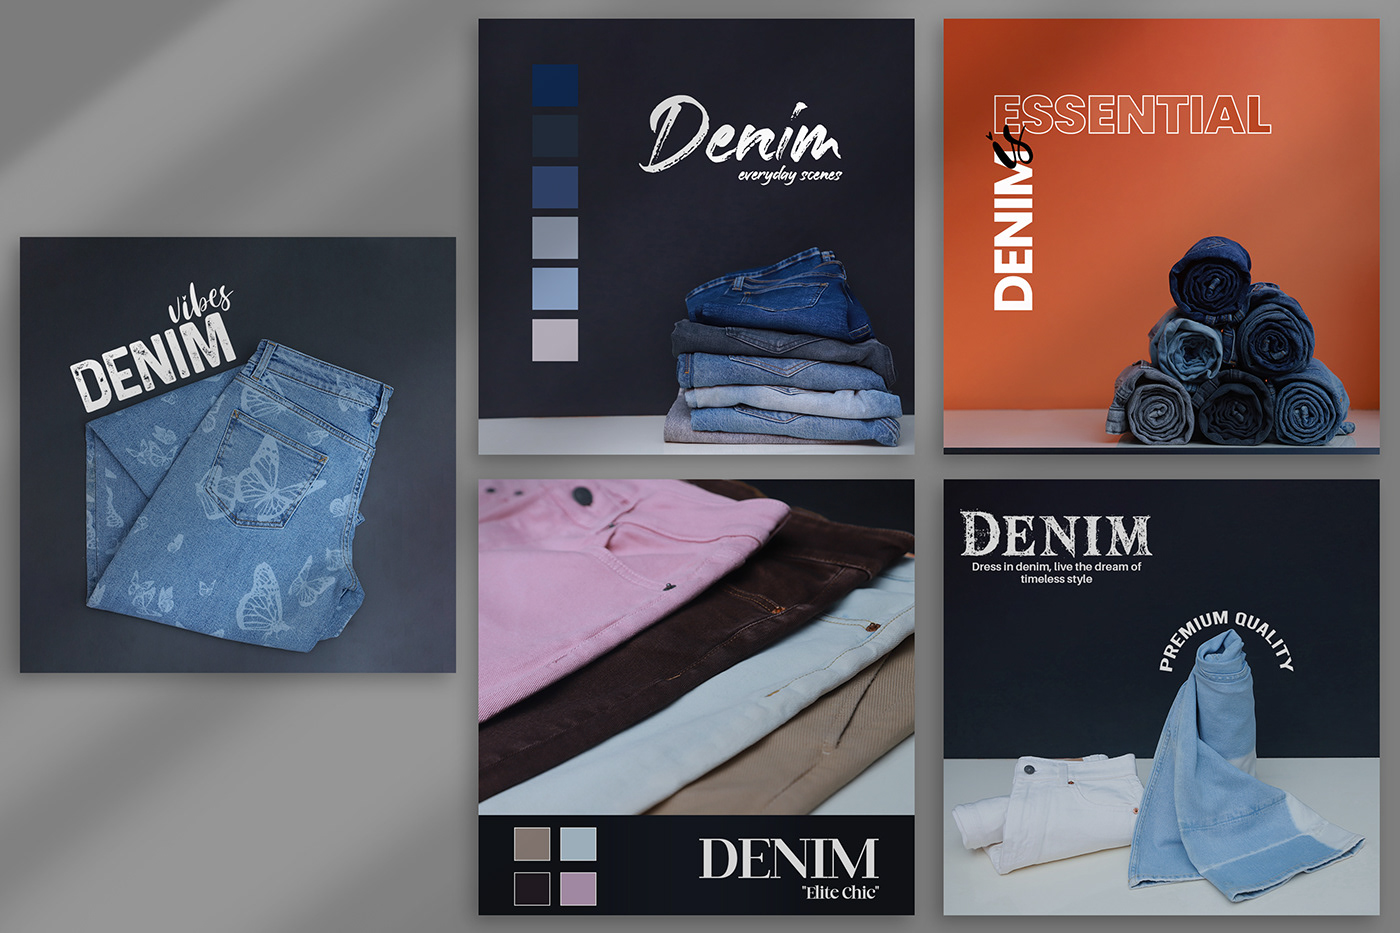 Denim denim jacket denim jeans Denim Design jeans JeansWear marketing   Advertising  denims jeans&fashion